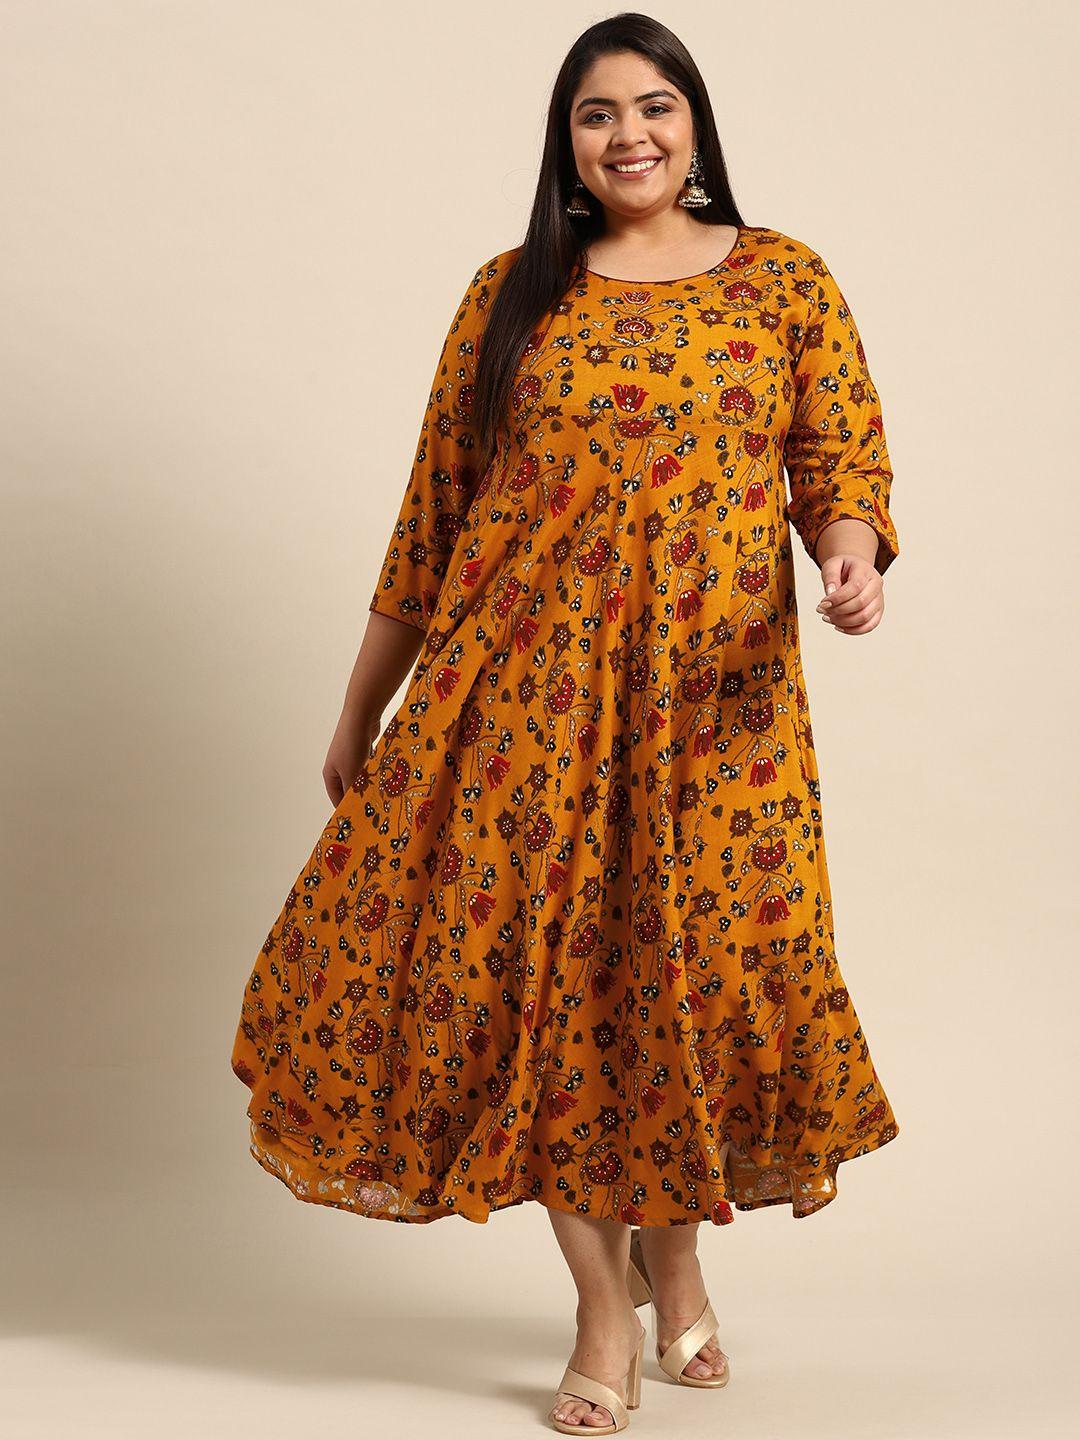 rangmayee mustard yellow & maroon floral liva ethnic maxi dress